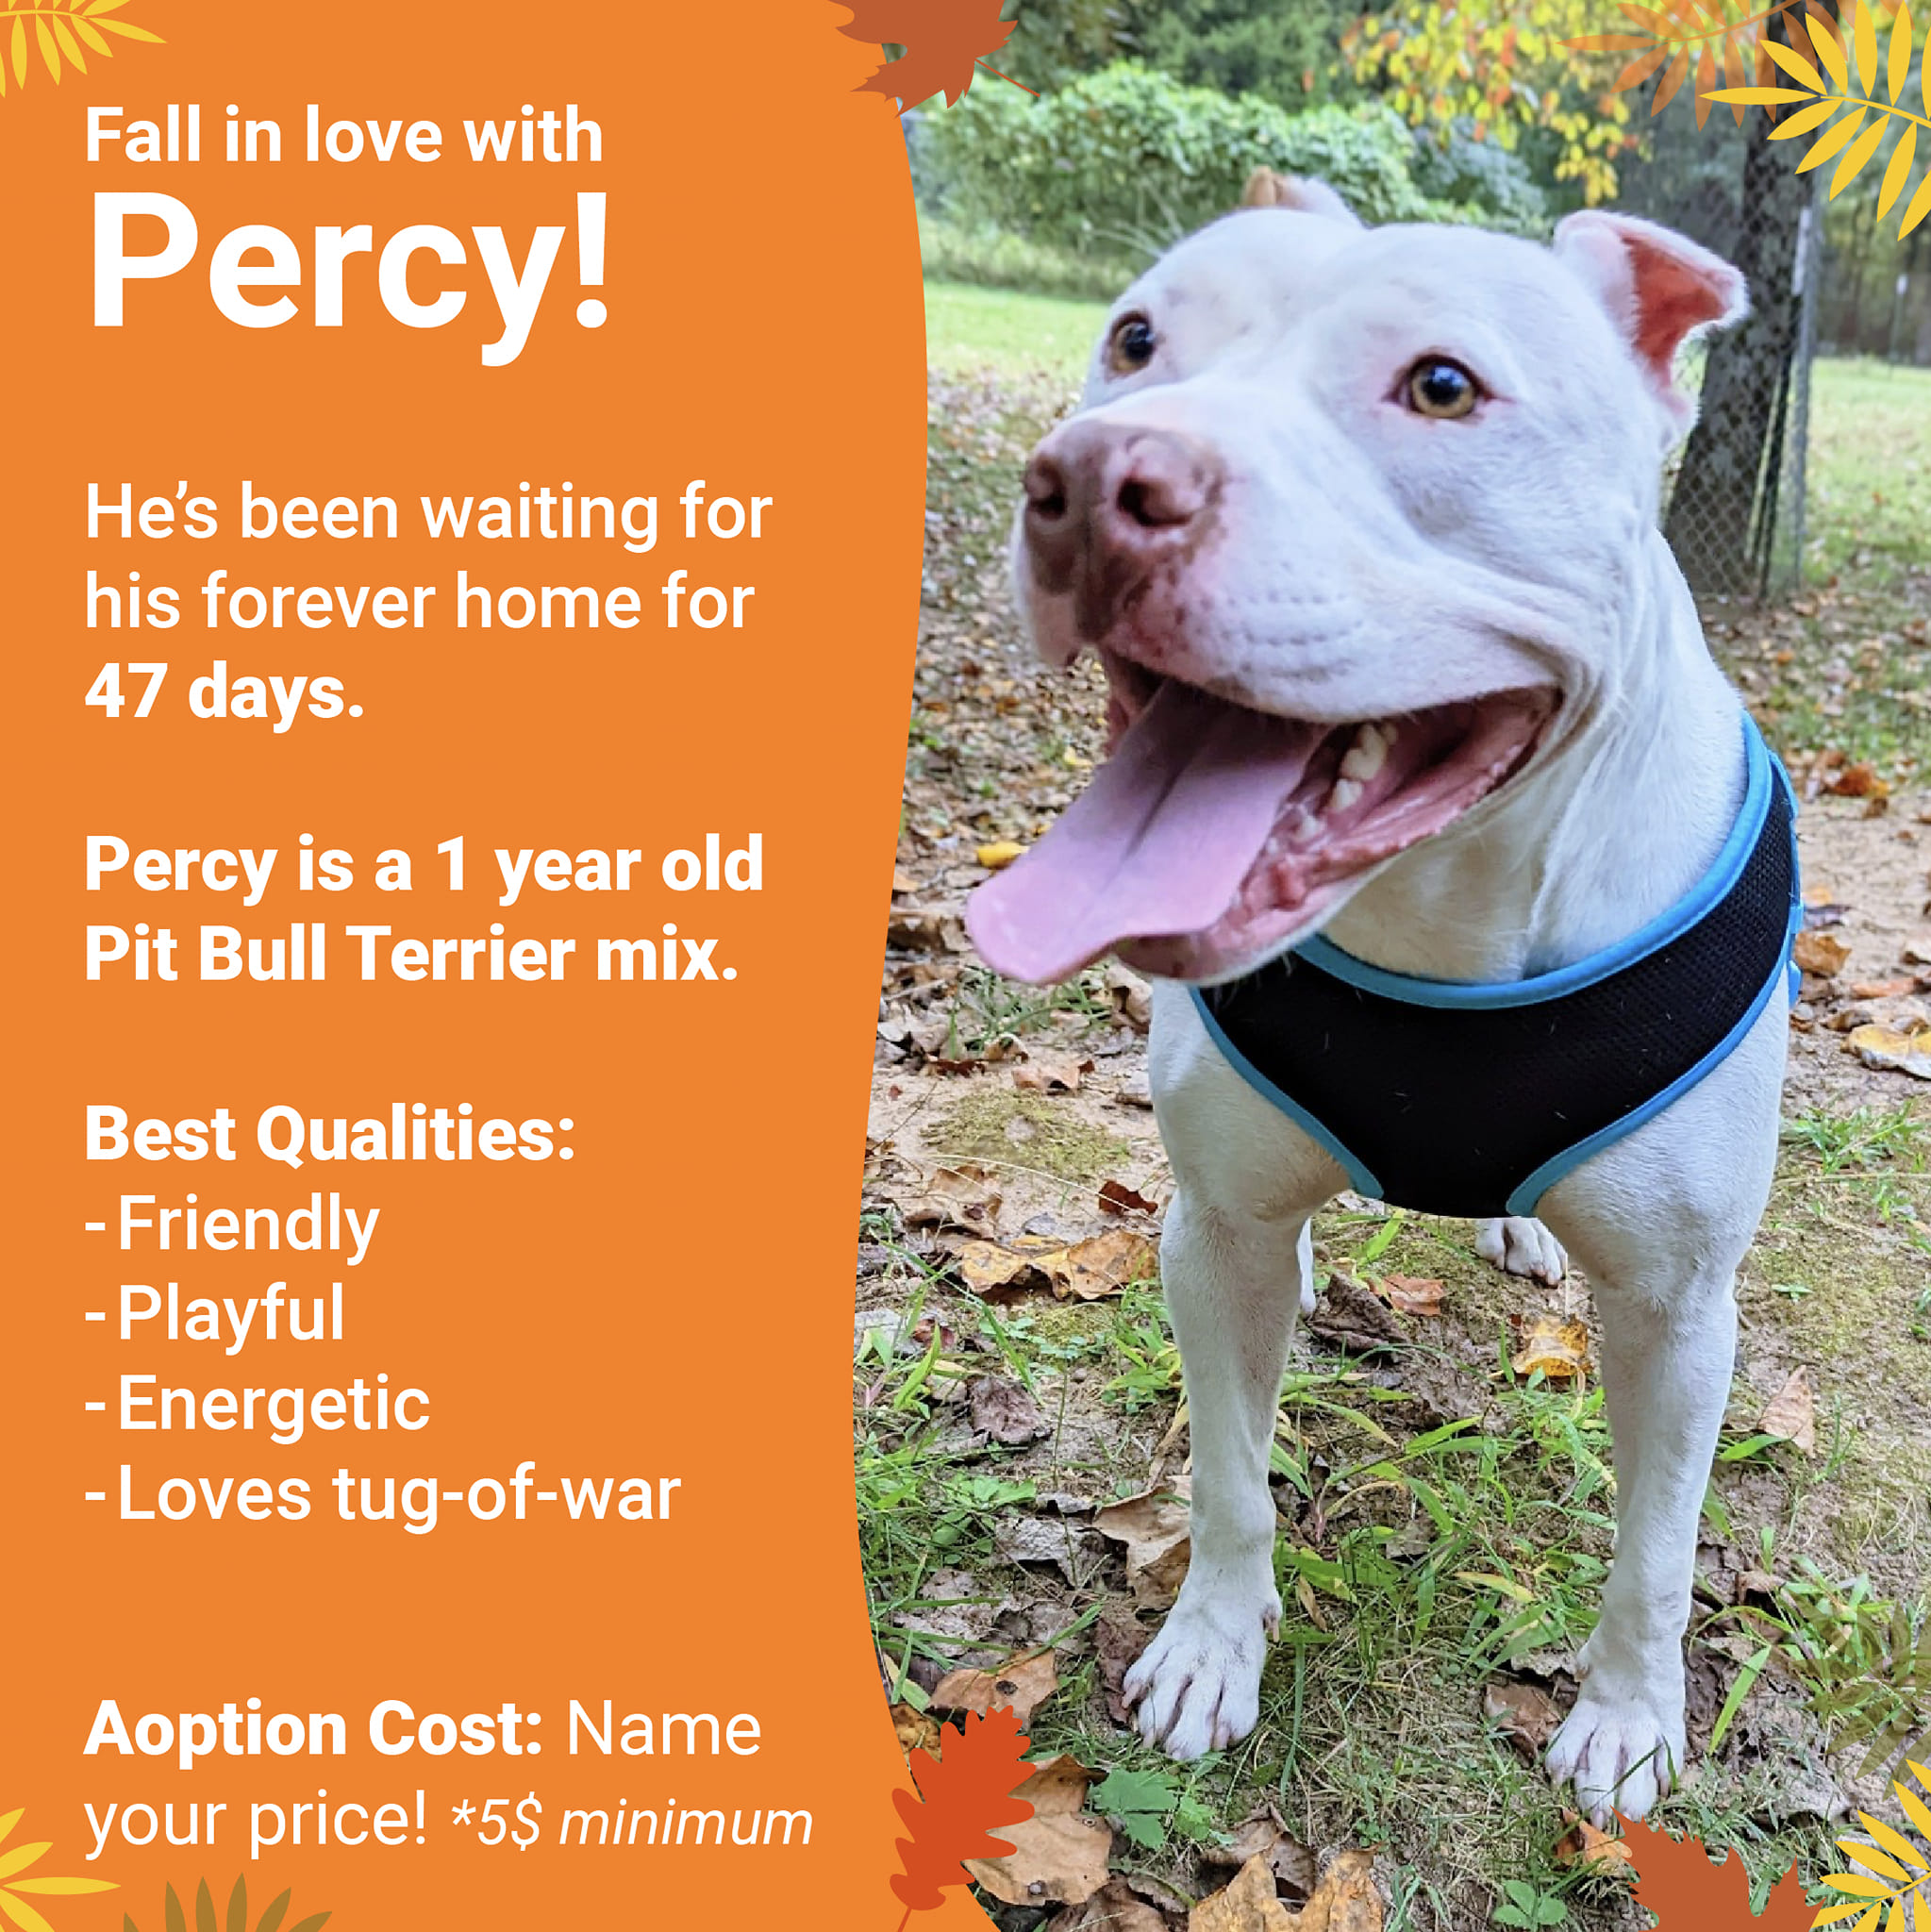 Meet Percy!